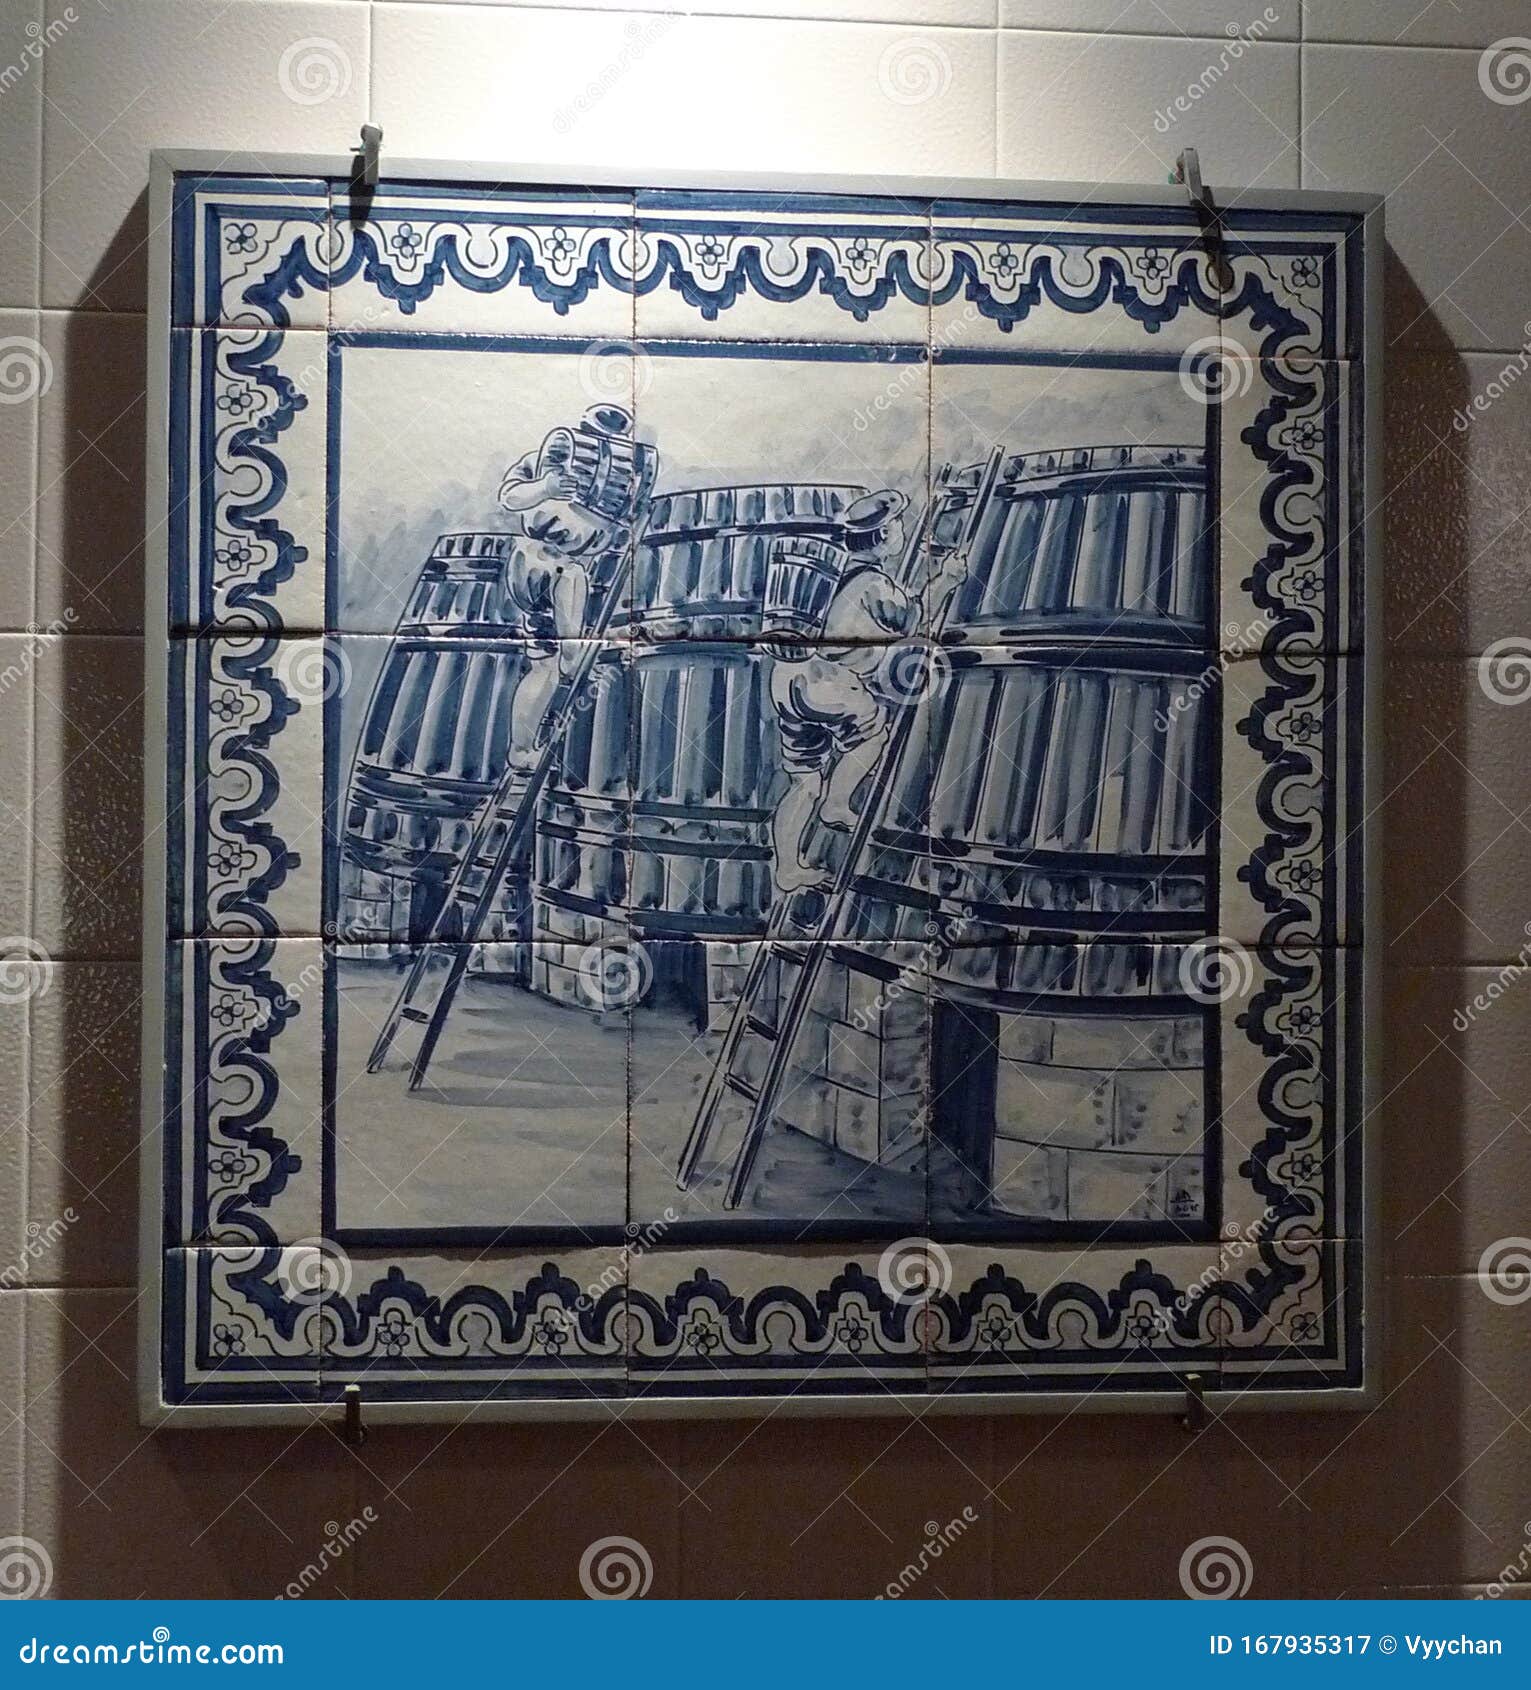 macau macao portugal vineyard history of wine port portuguese azulejos ceramic tiles porcelain macau mosaic macao mosaico